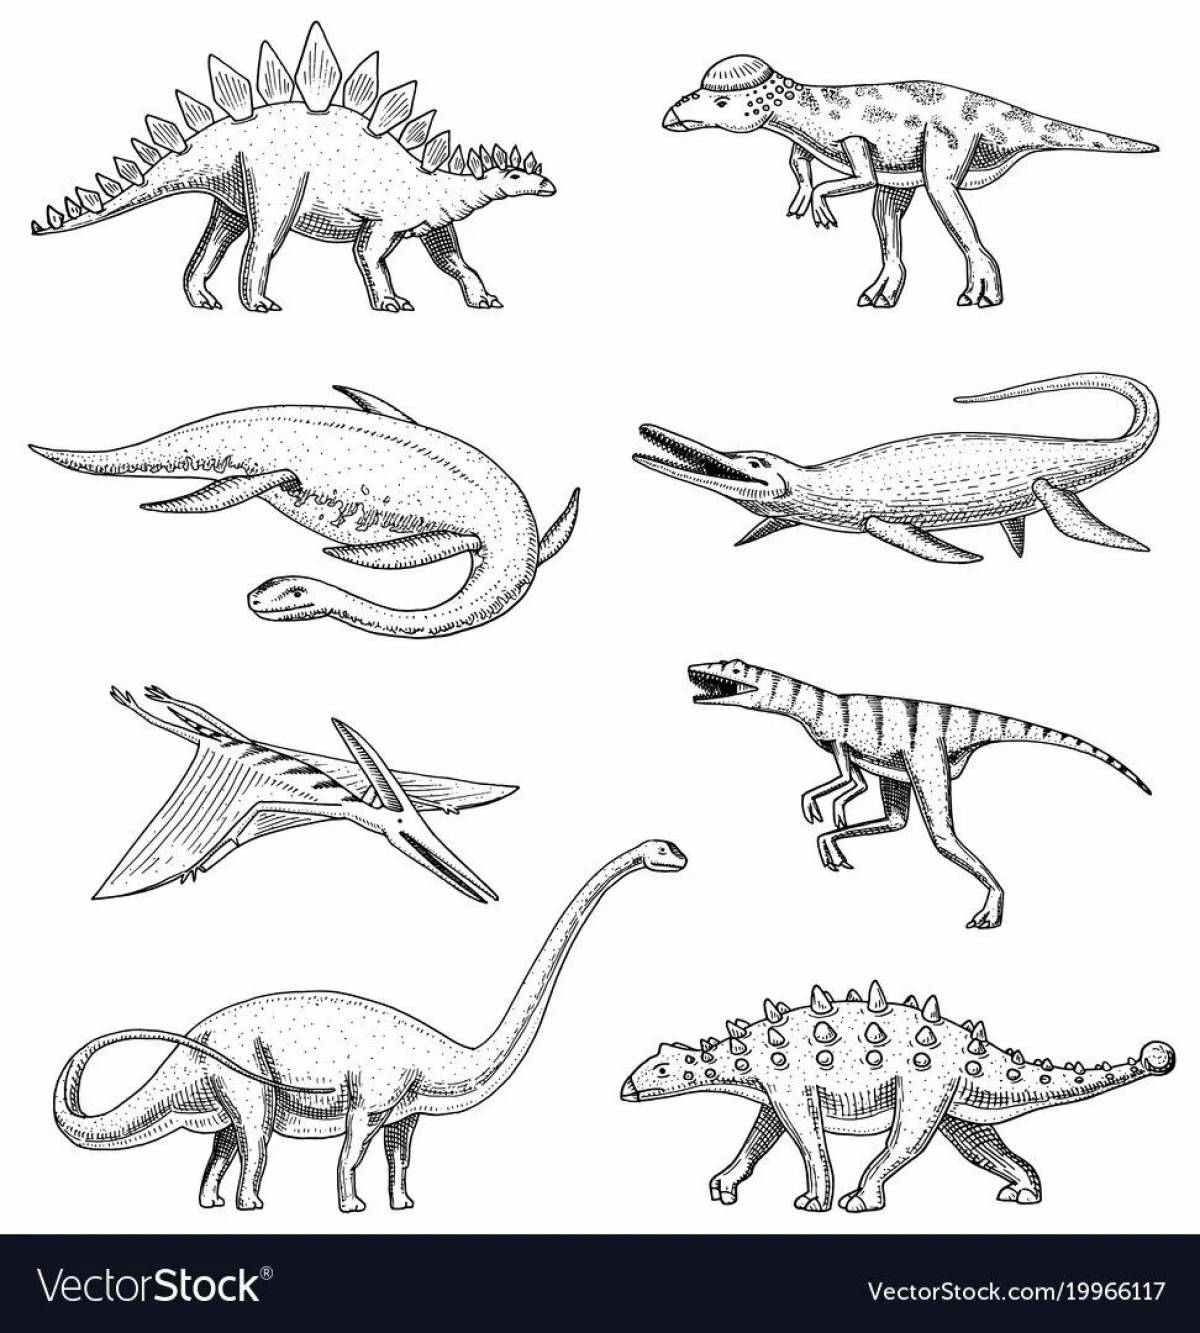 Mosasaurus coloring book for kids